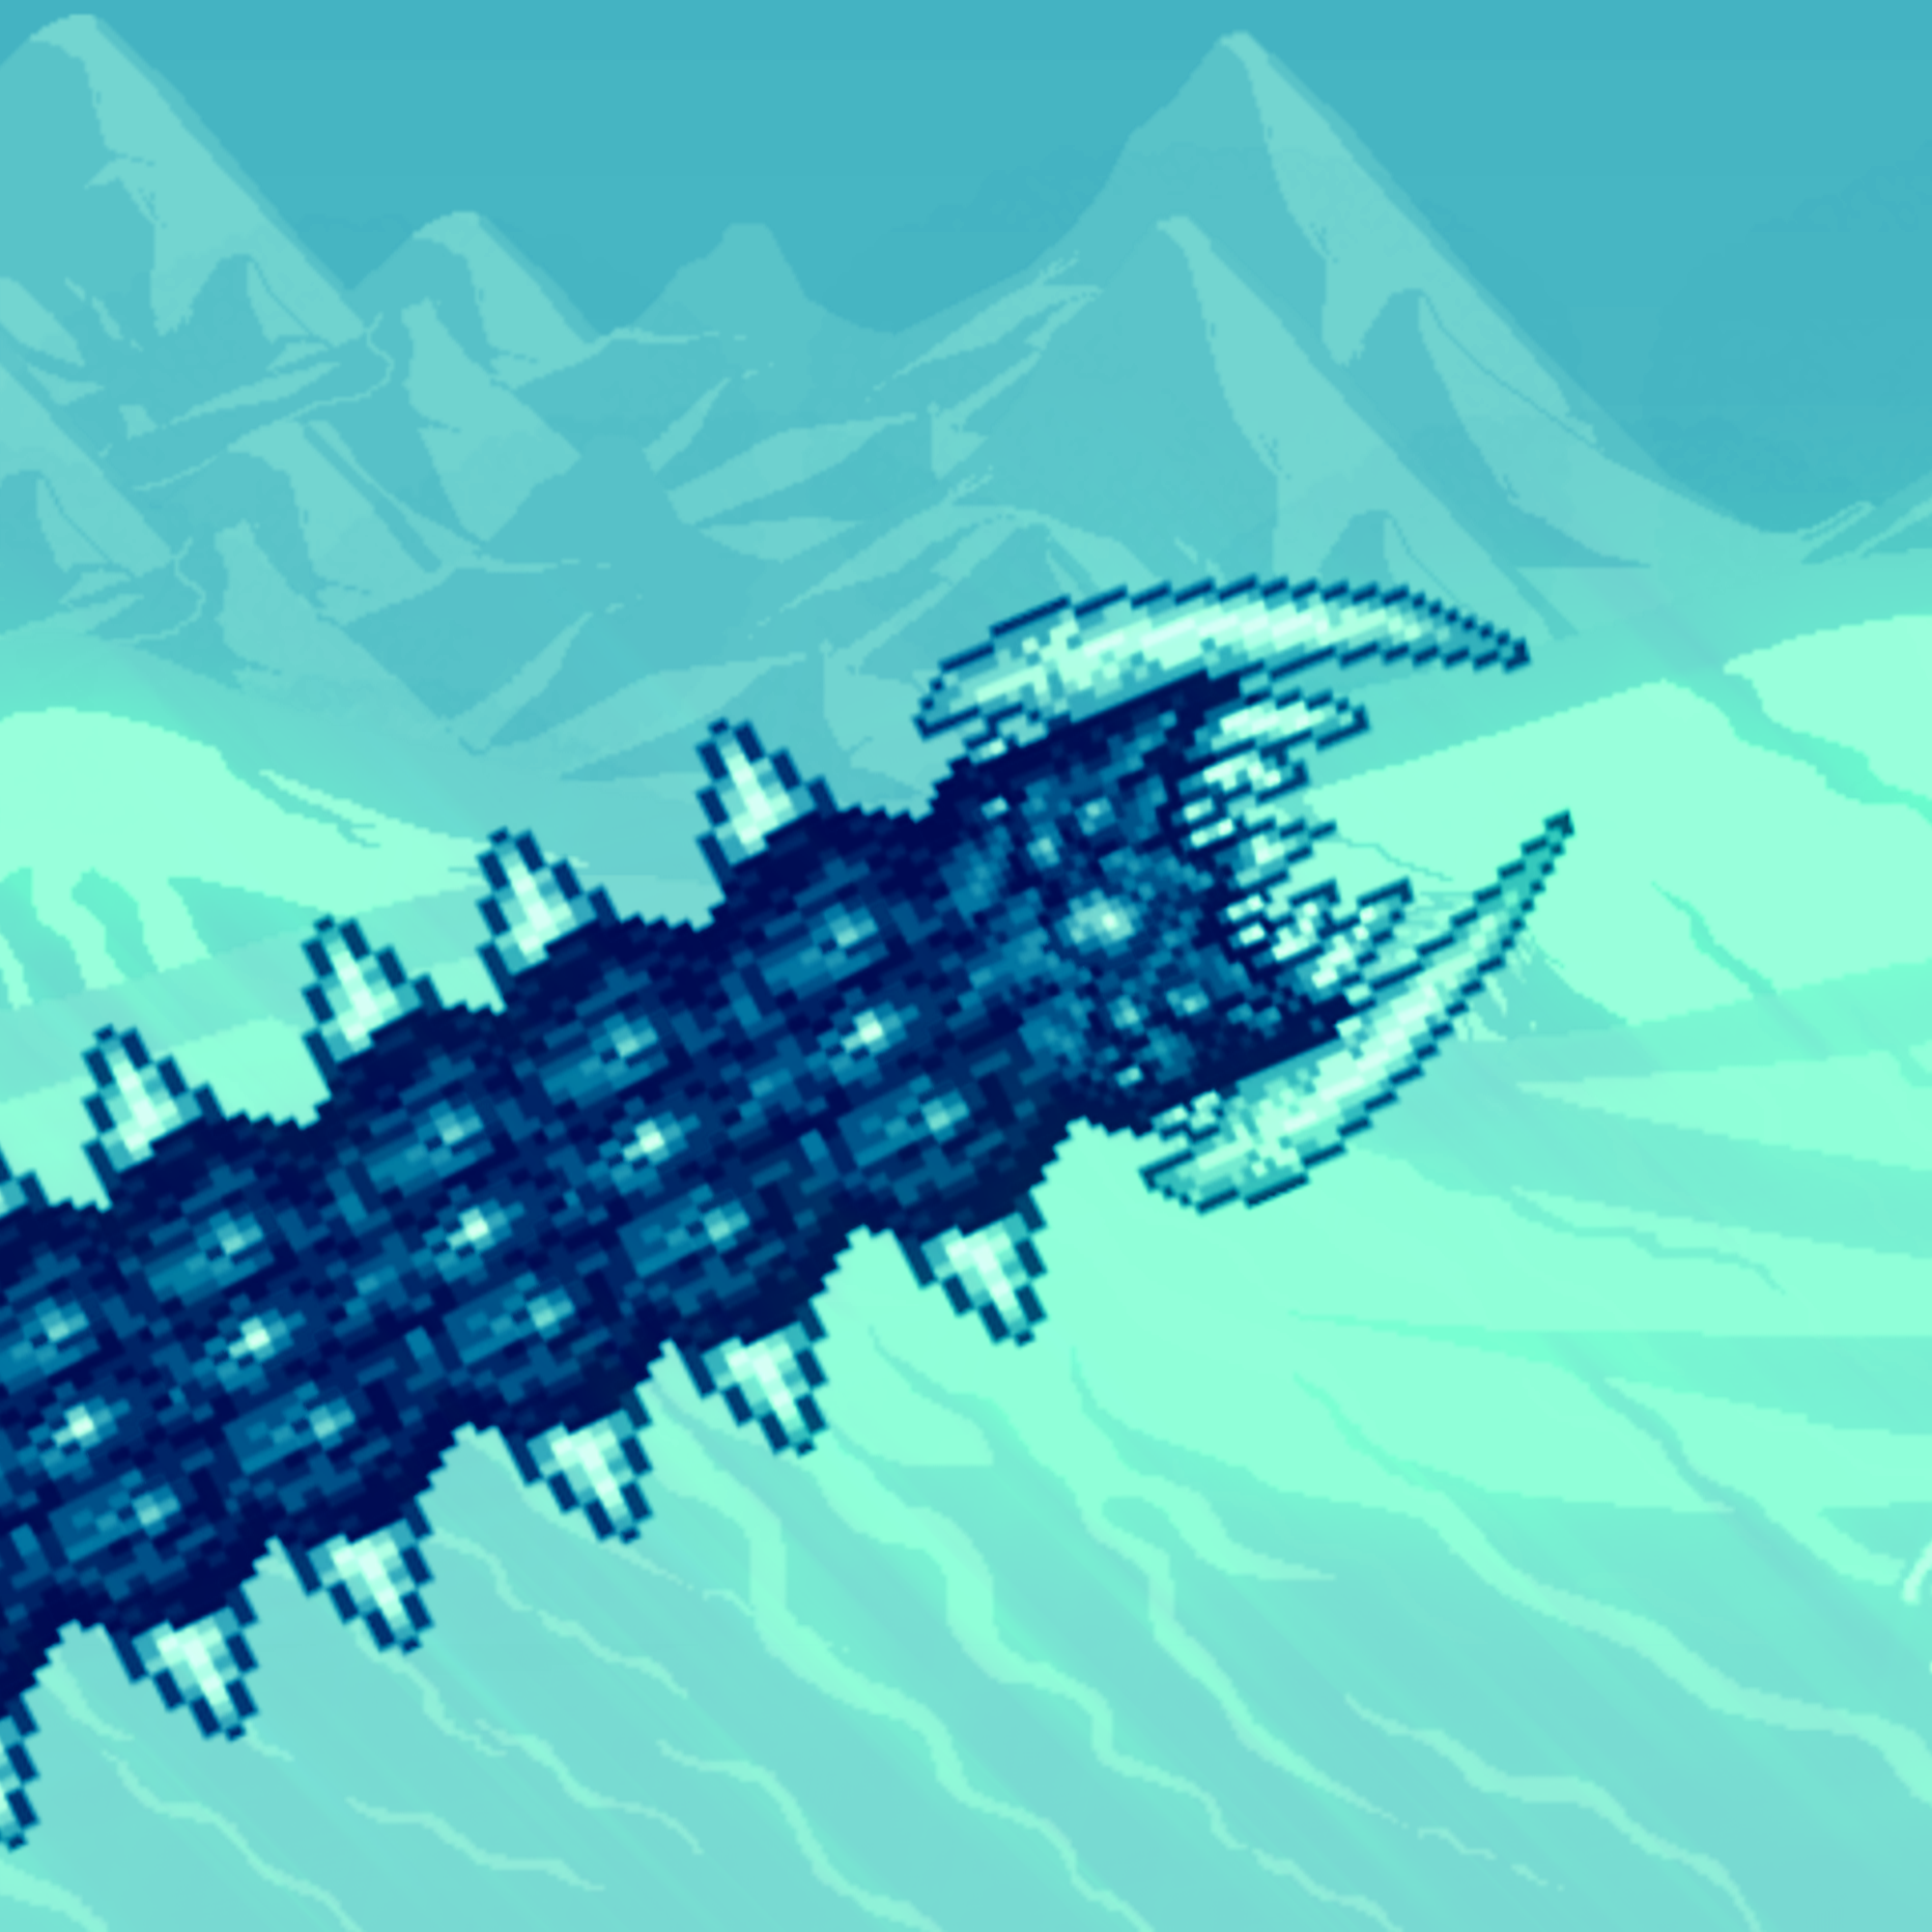 Terraria fish. Гигантский моллюск террария. Сернистое море террария. Звёздный дракон террария. Медуза террария.